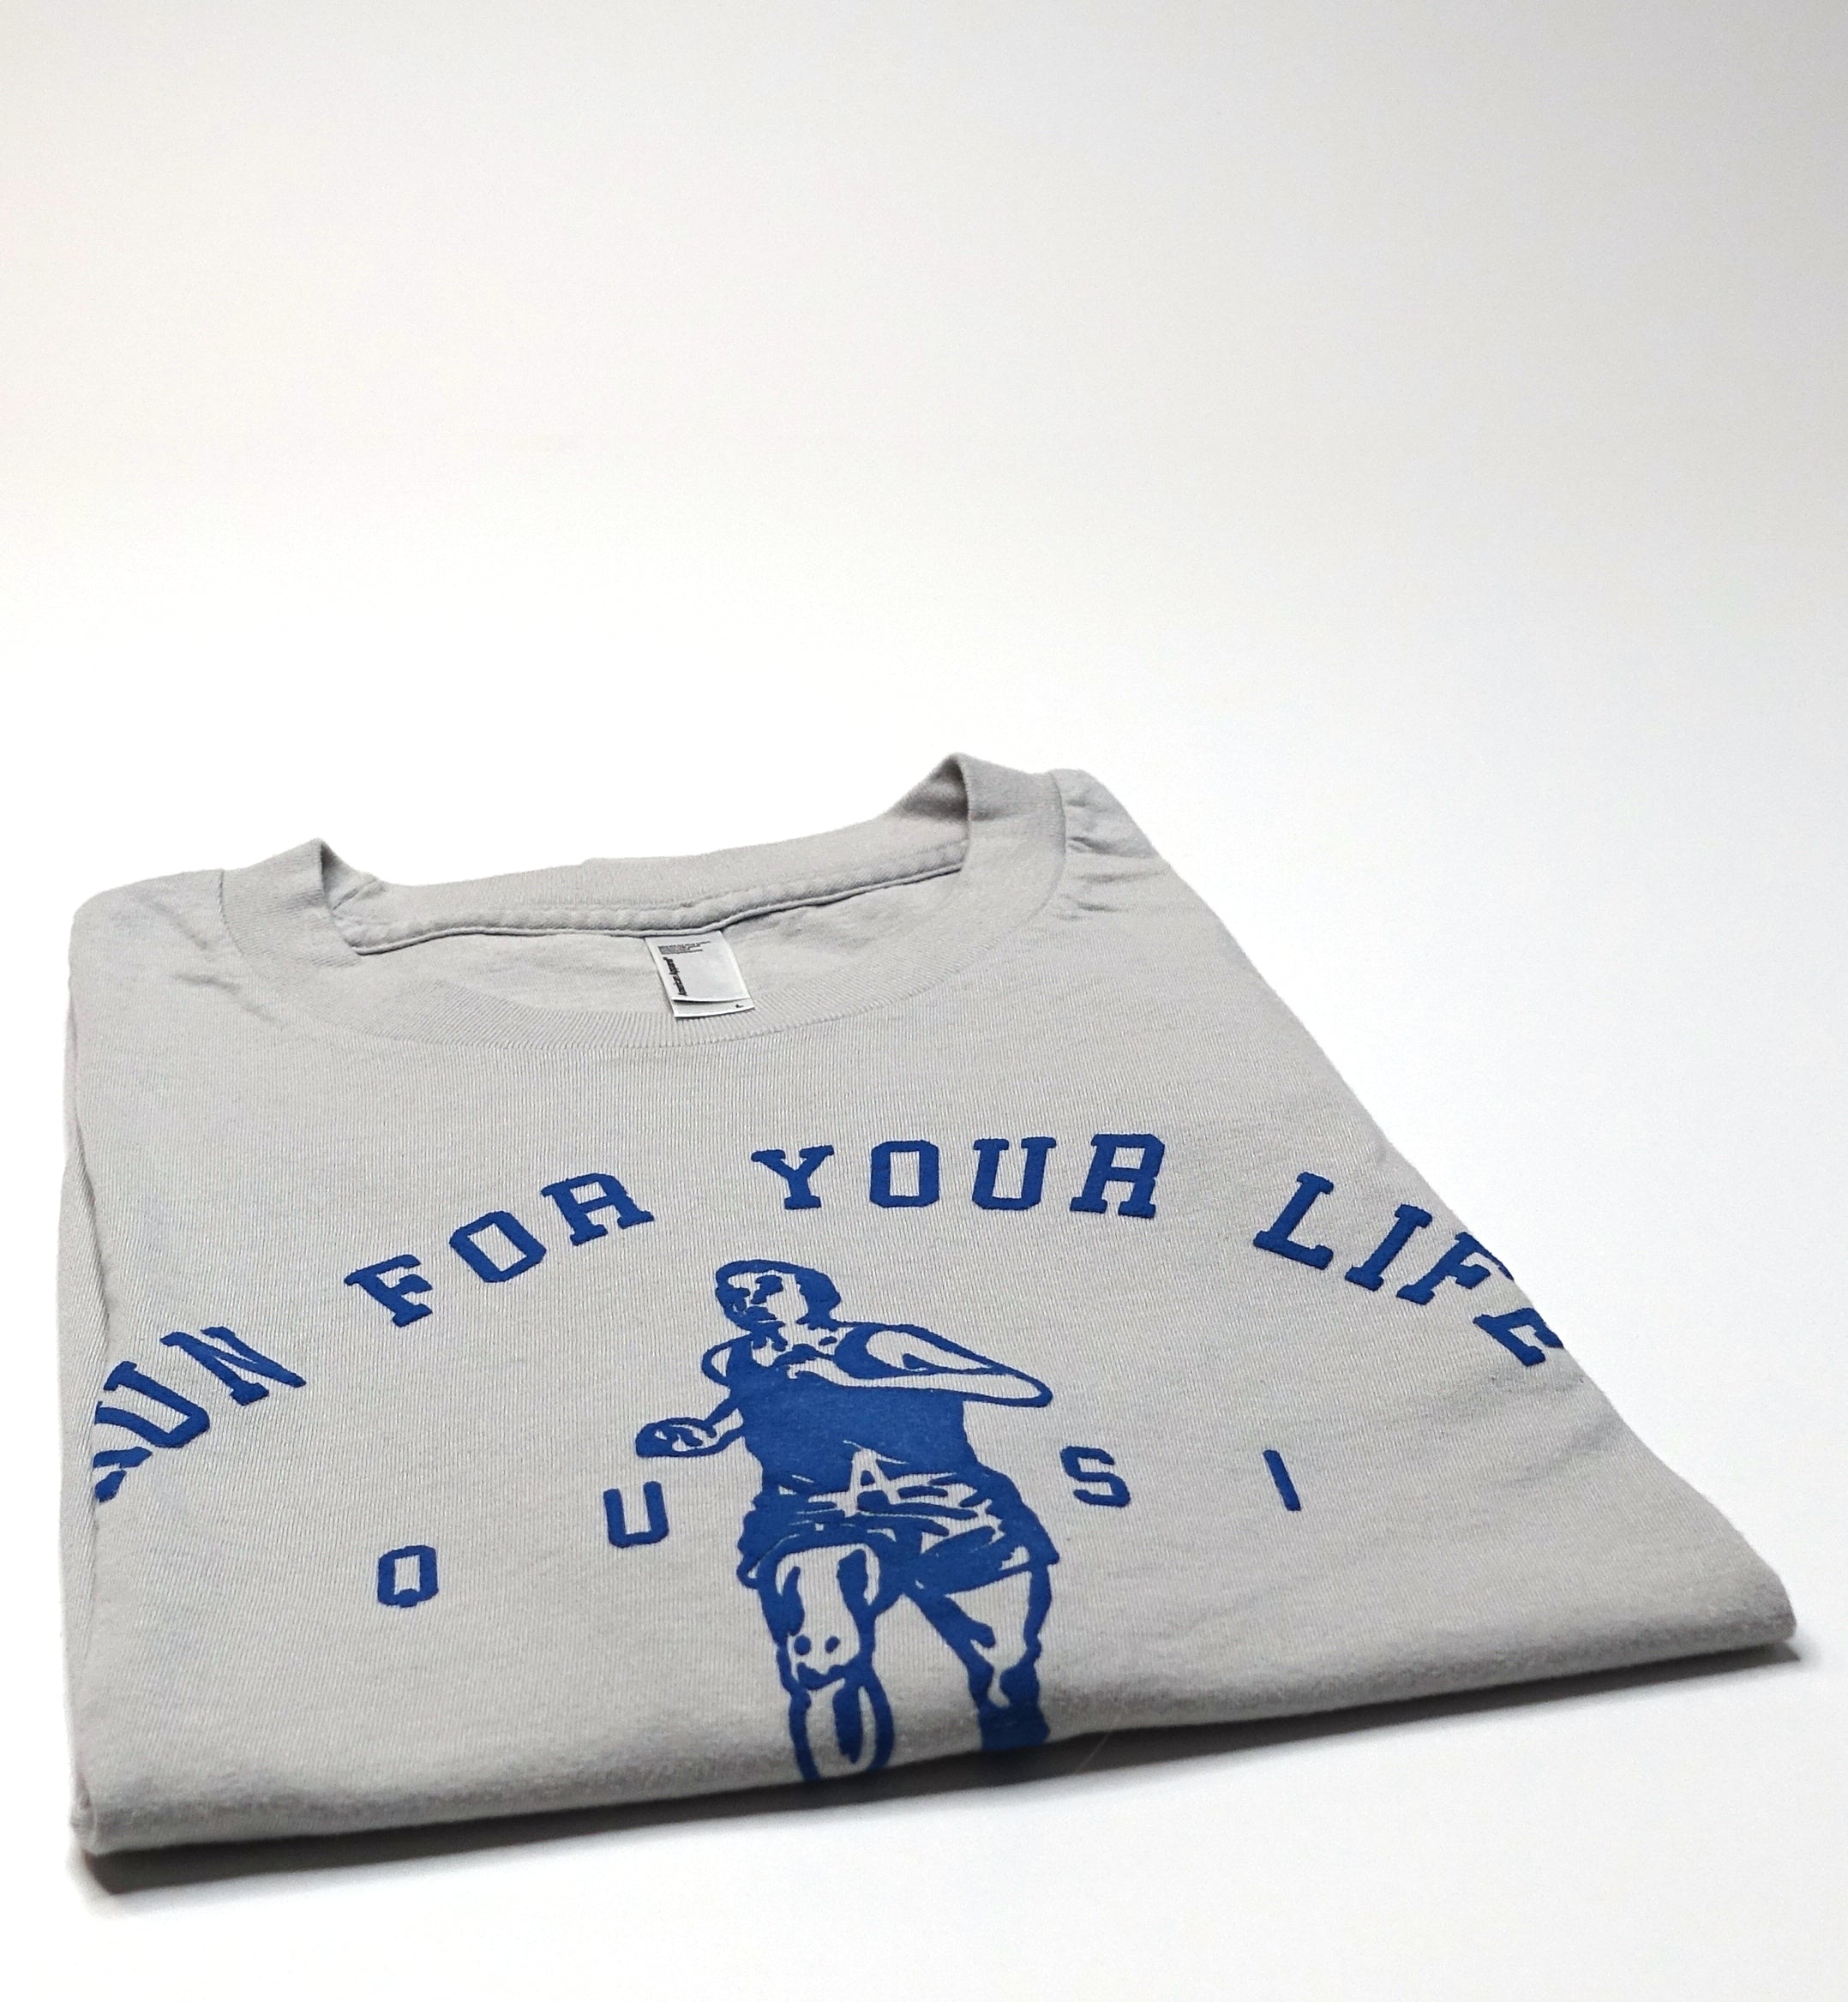 Quasi - Run For Your Life / The Sword Of God 2001 Tour Shirt Size Large